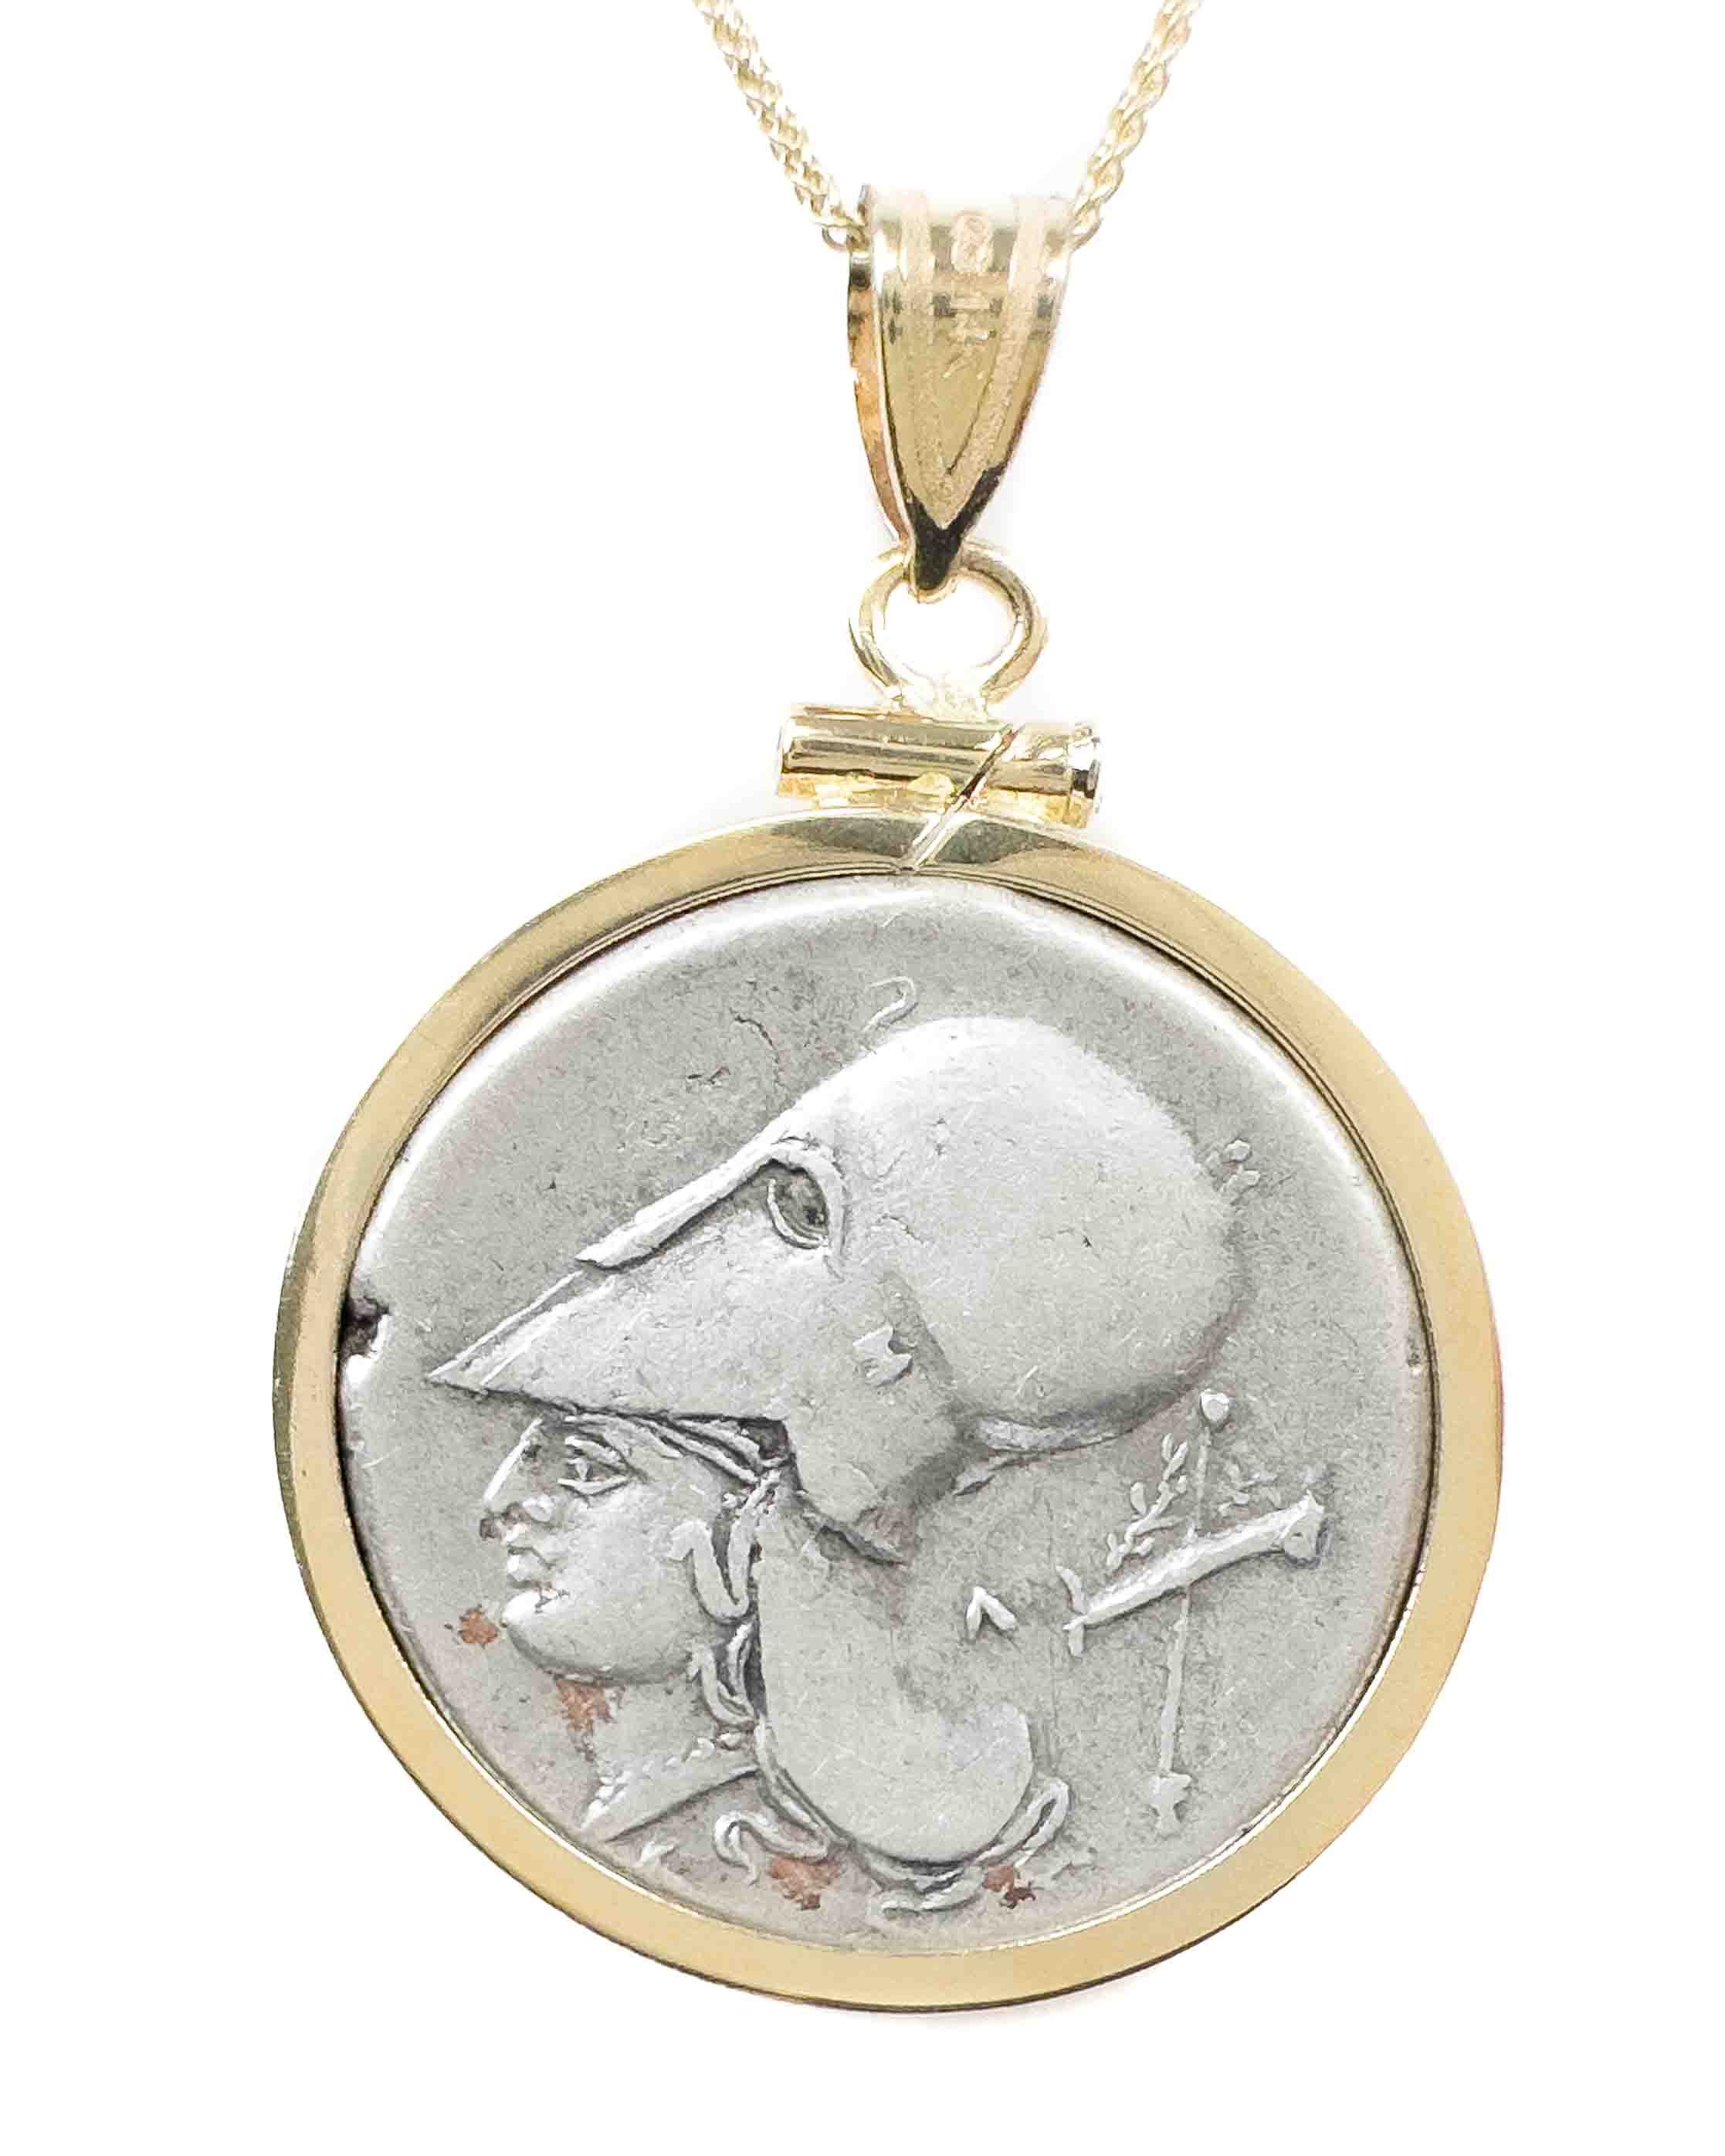 14k Gold Genuine Ancient Greek Coin Necklace (Pegasus/Athena; 320-380 B.C.)